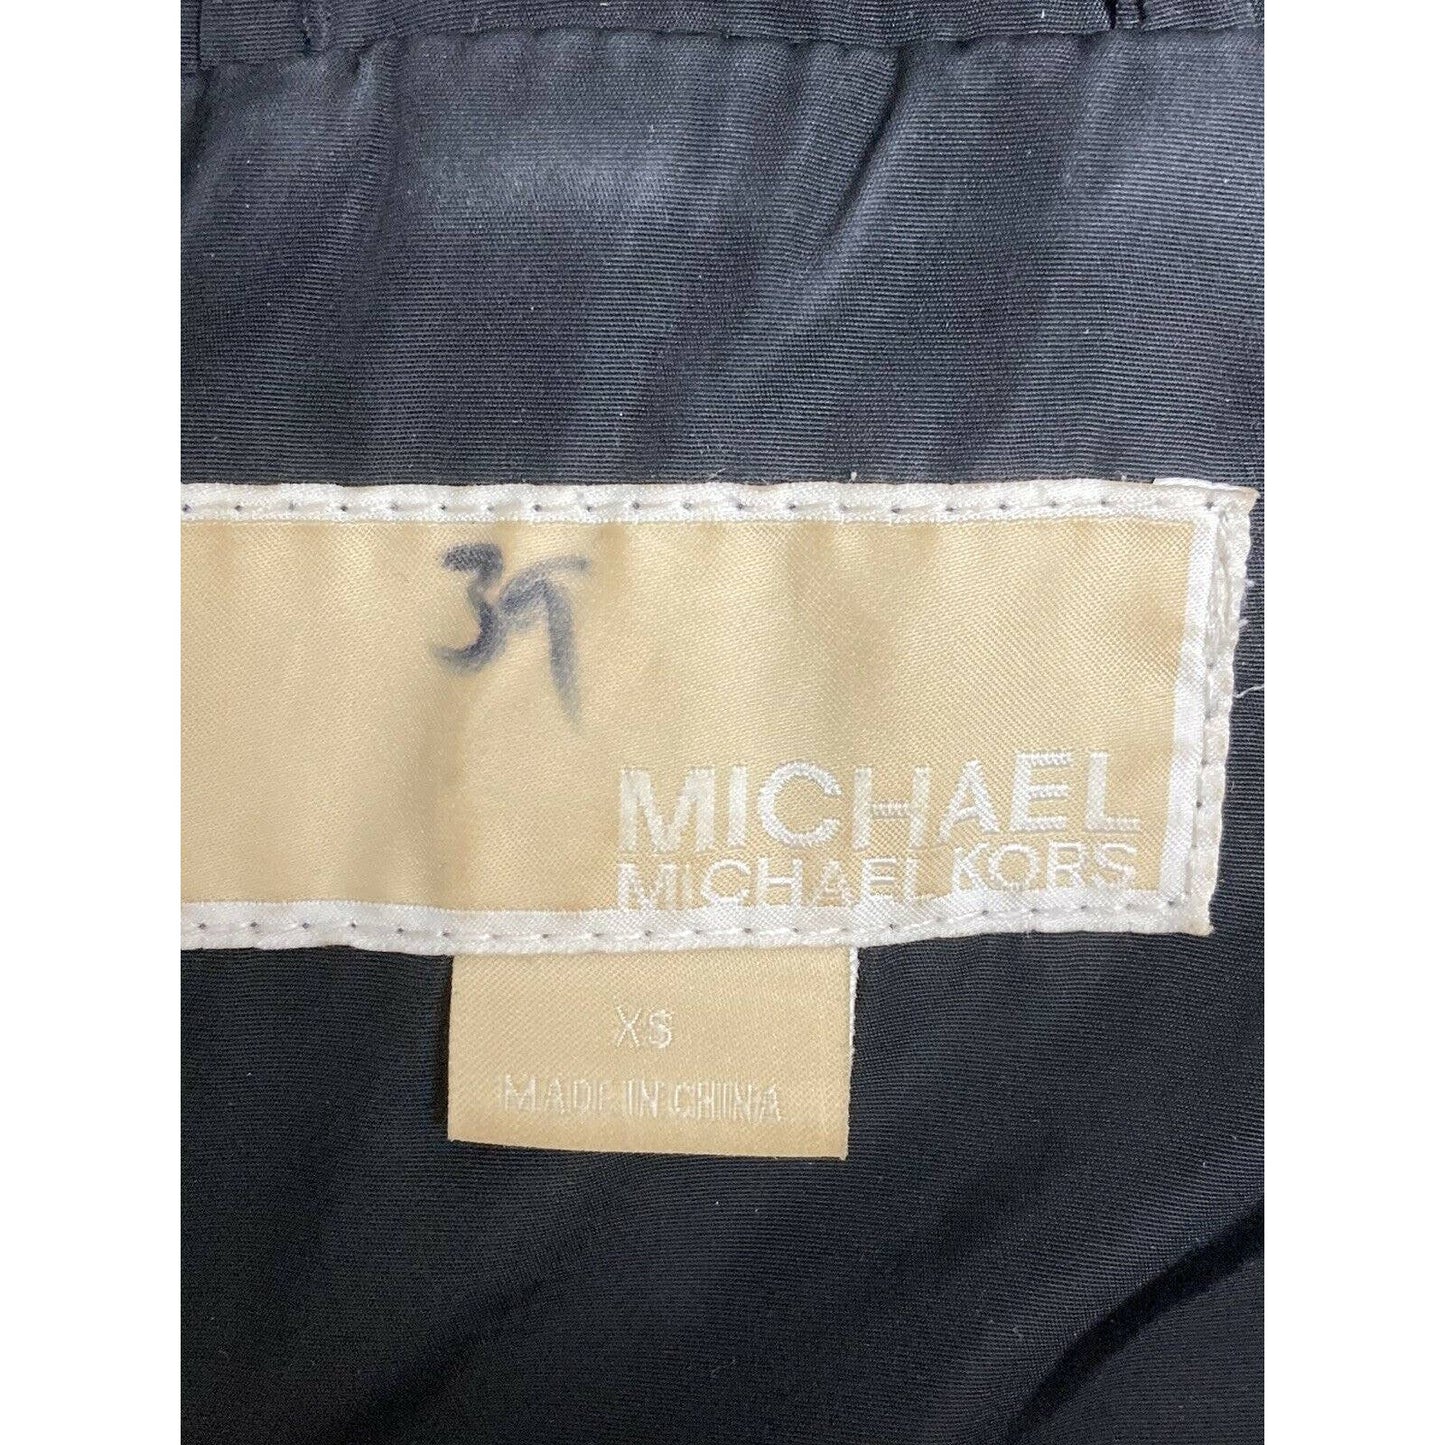 Michael Kors Quilted Jacket Coat Size XS Black Women’s Zippers Snaps